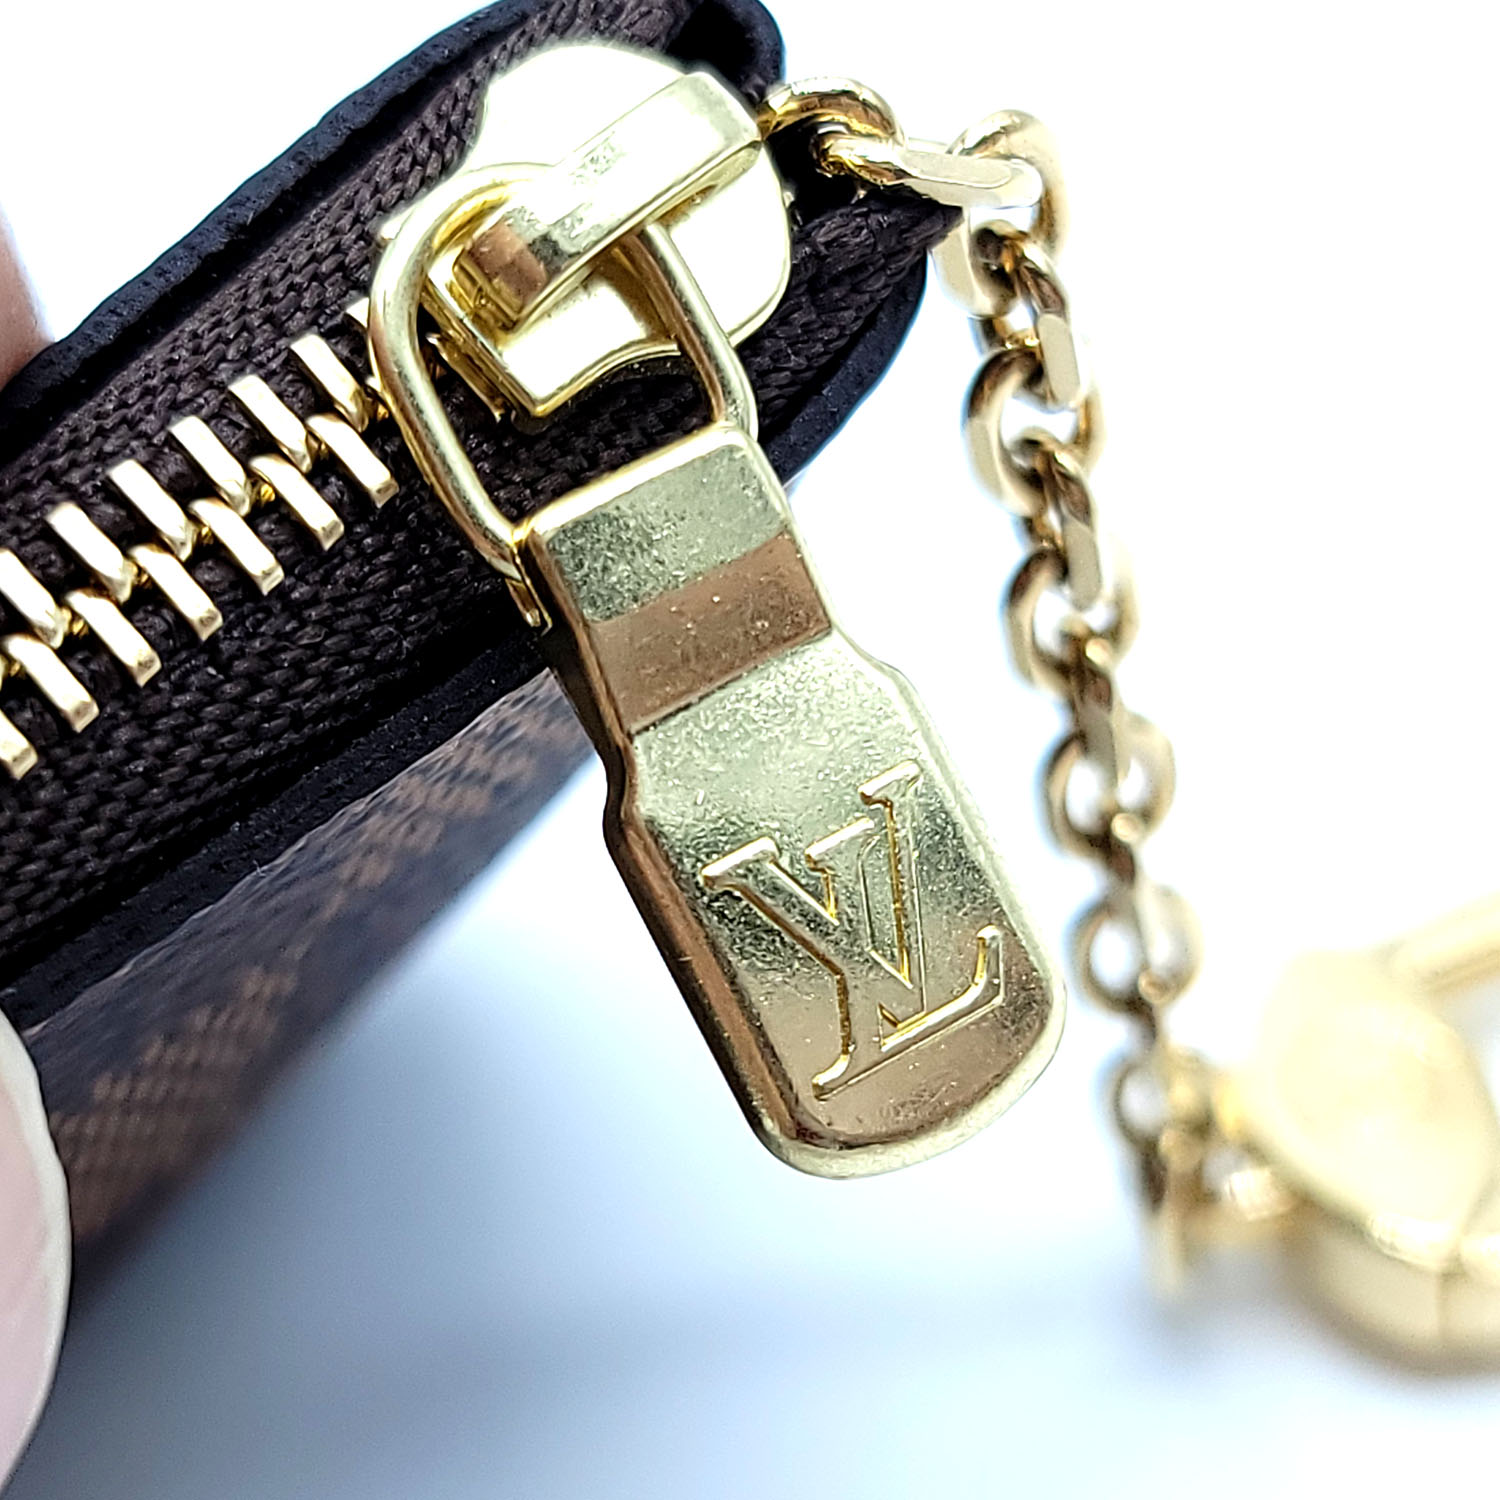 Louis Vuitton Key Pouch Damier Ebene - Luxury Replay